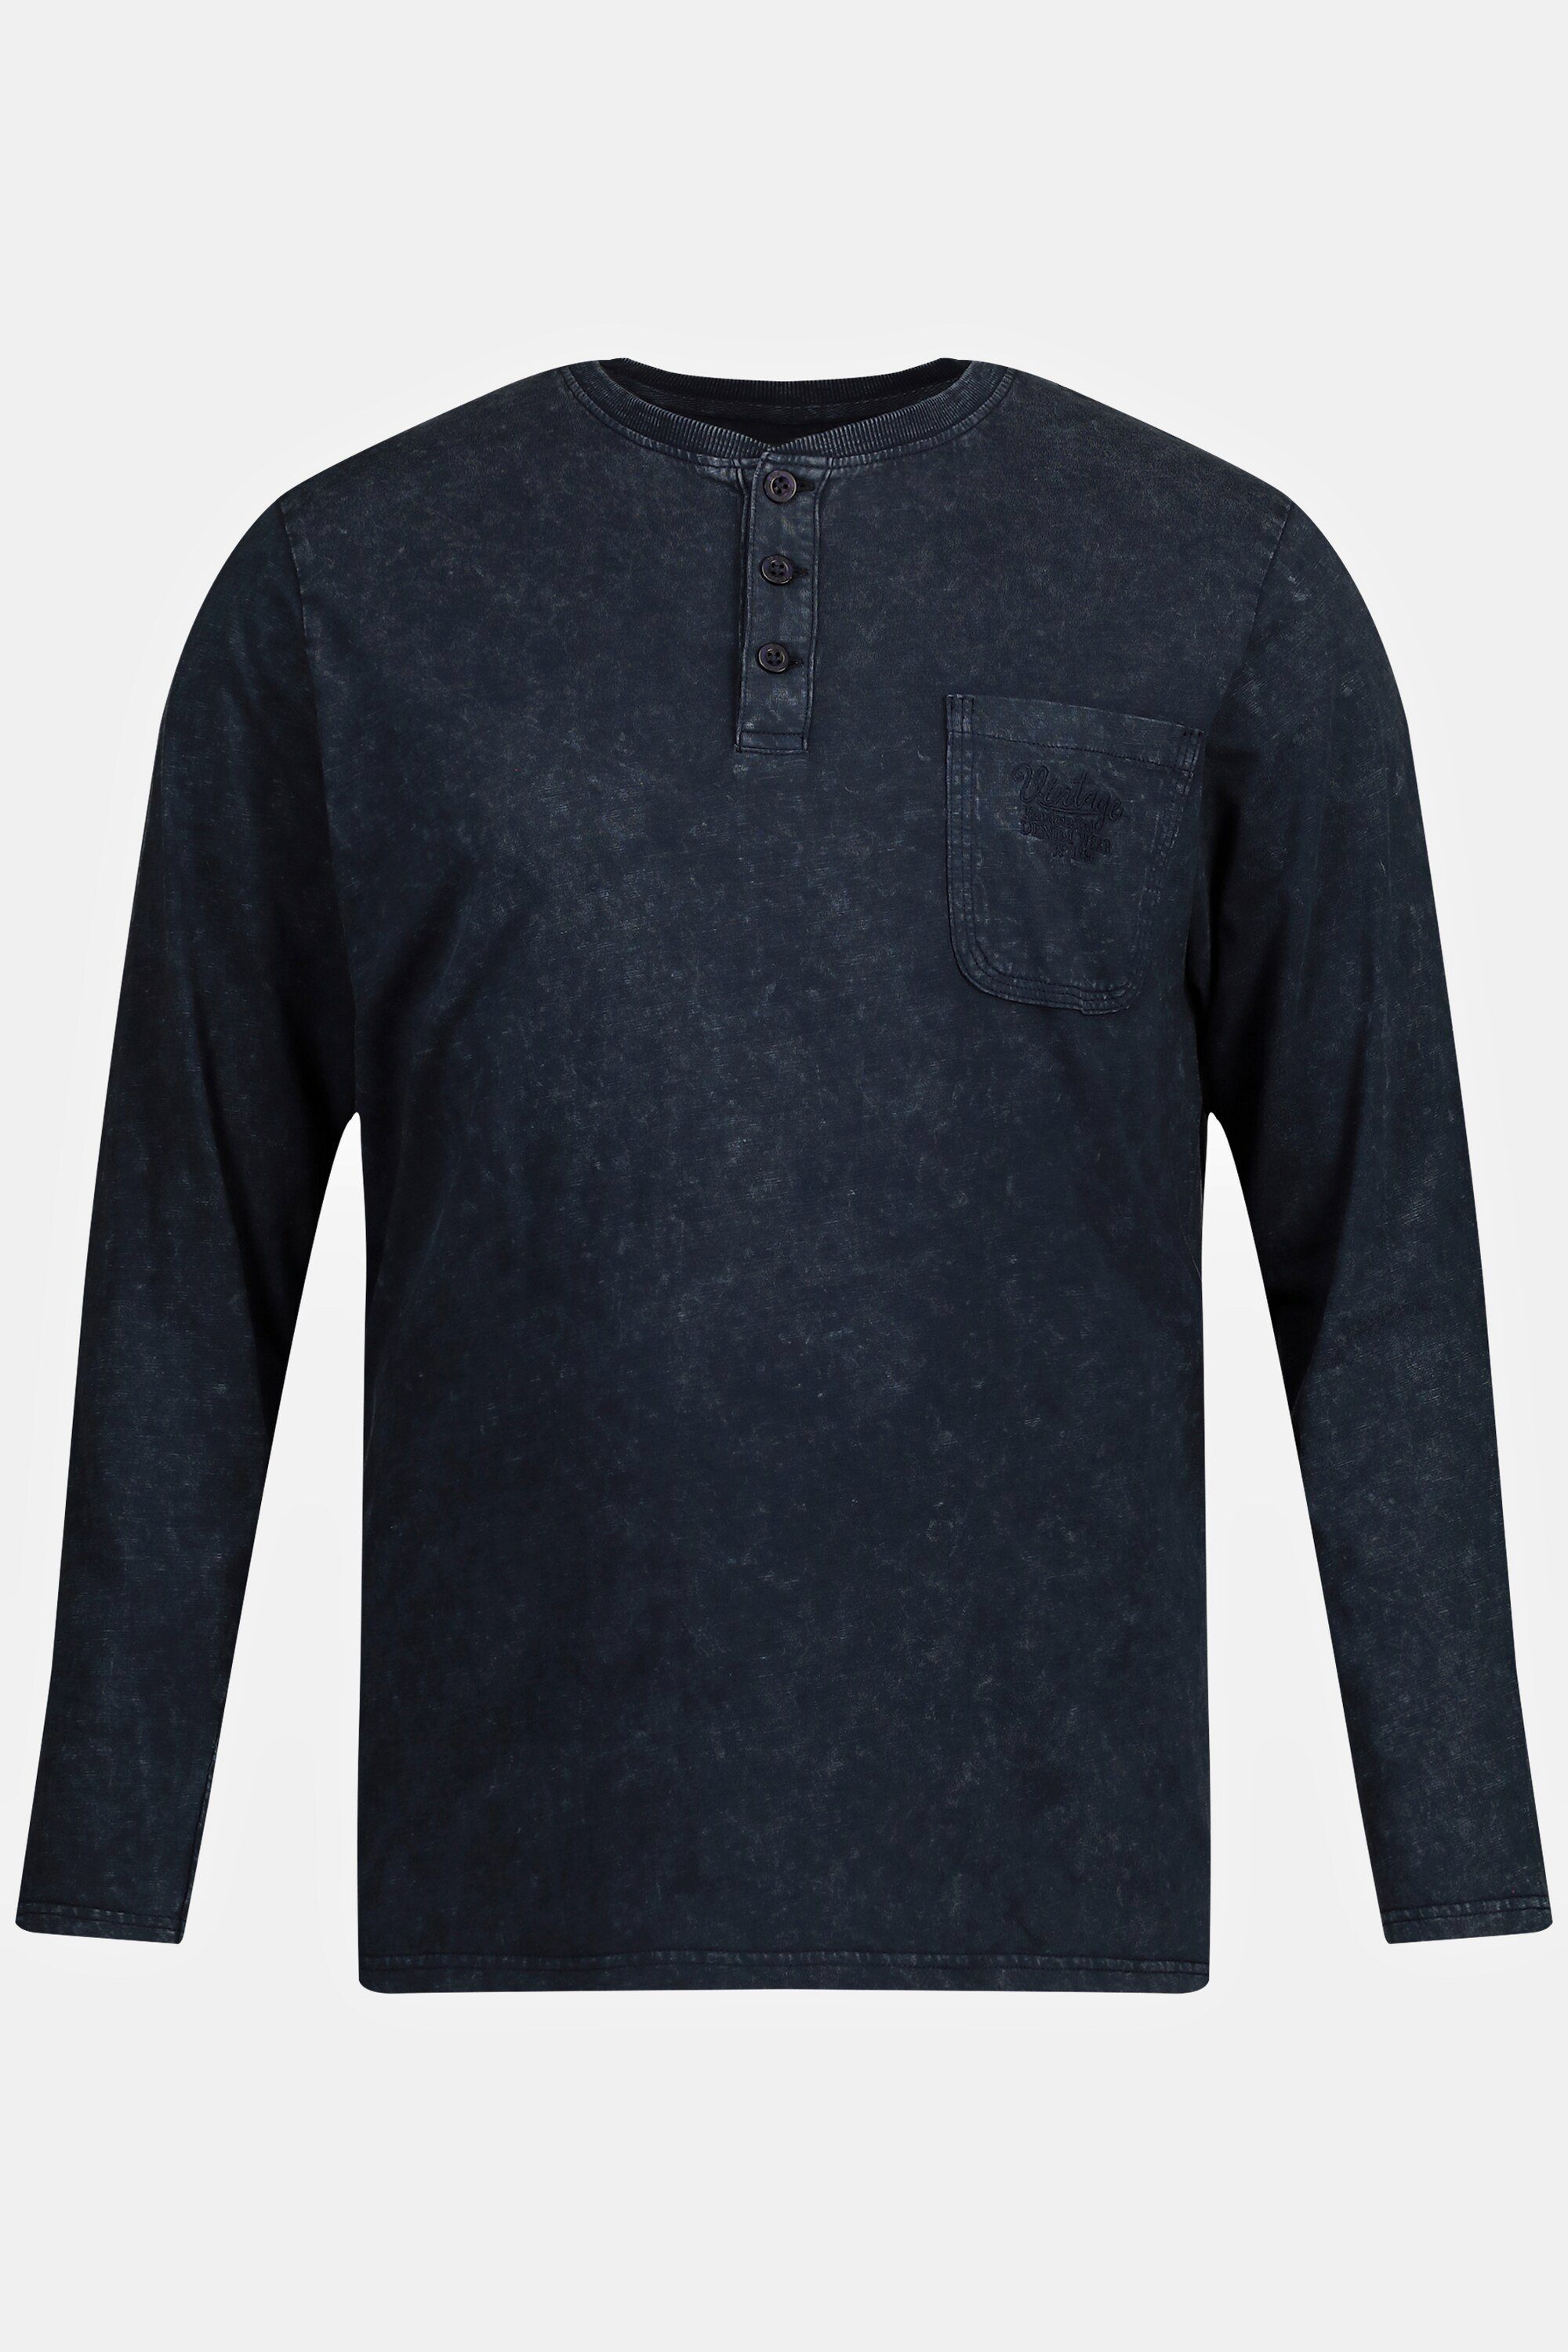 T-Shirt navy Knopfleiste Flammjersey blau JP1880 Langarm Henley